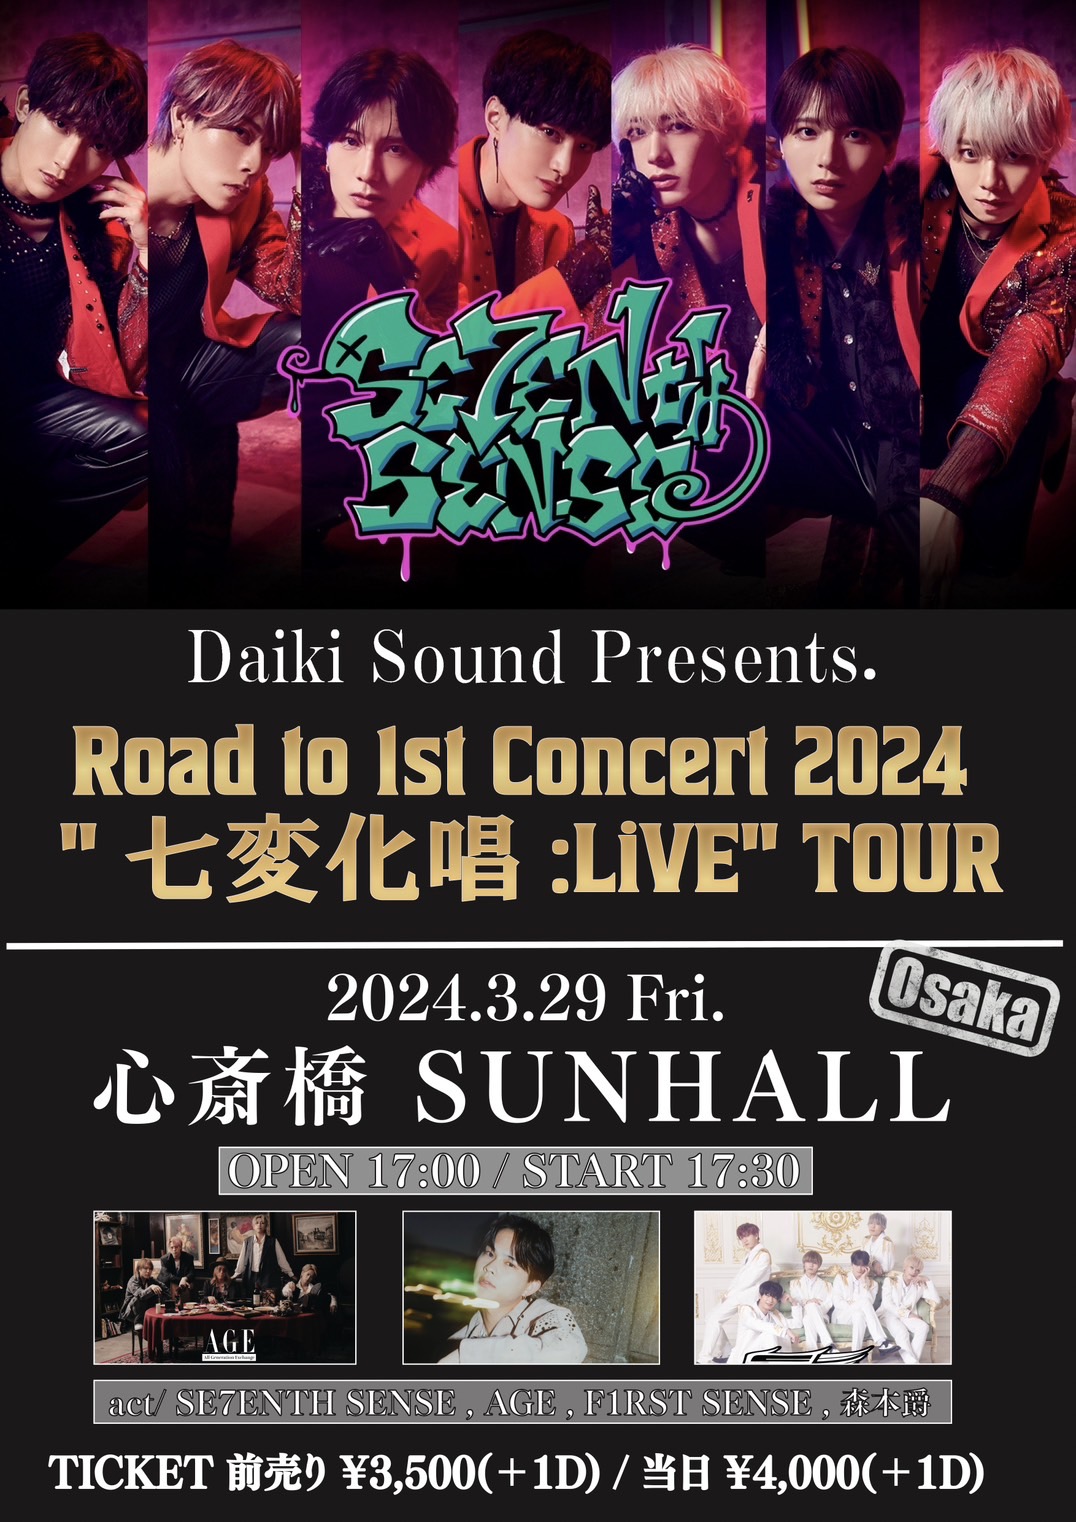 Daiki Sound Presents. SE7ENTH SENSE「Road to 1st Concert 2024 “七変化唱:LiVE” TOUR」in Osaka